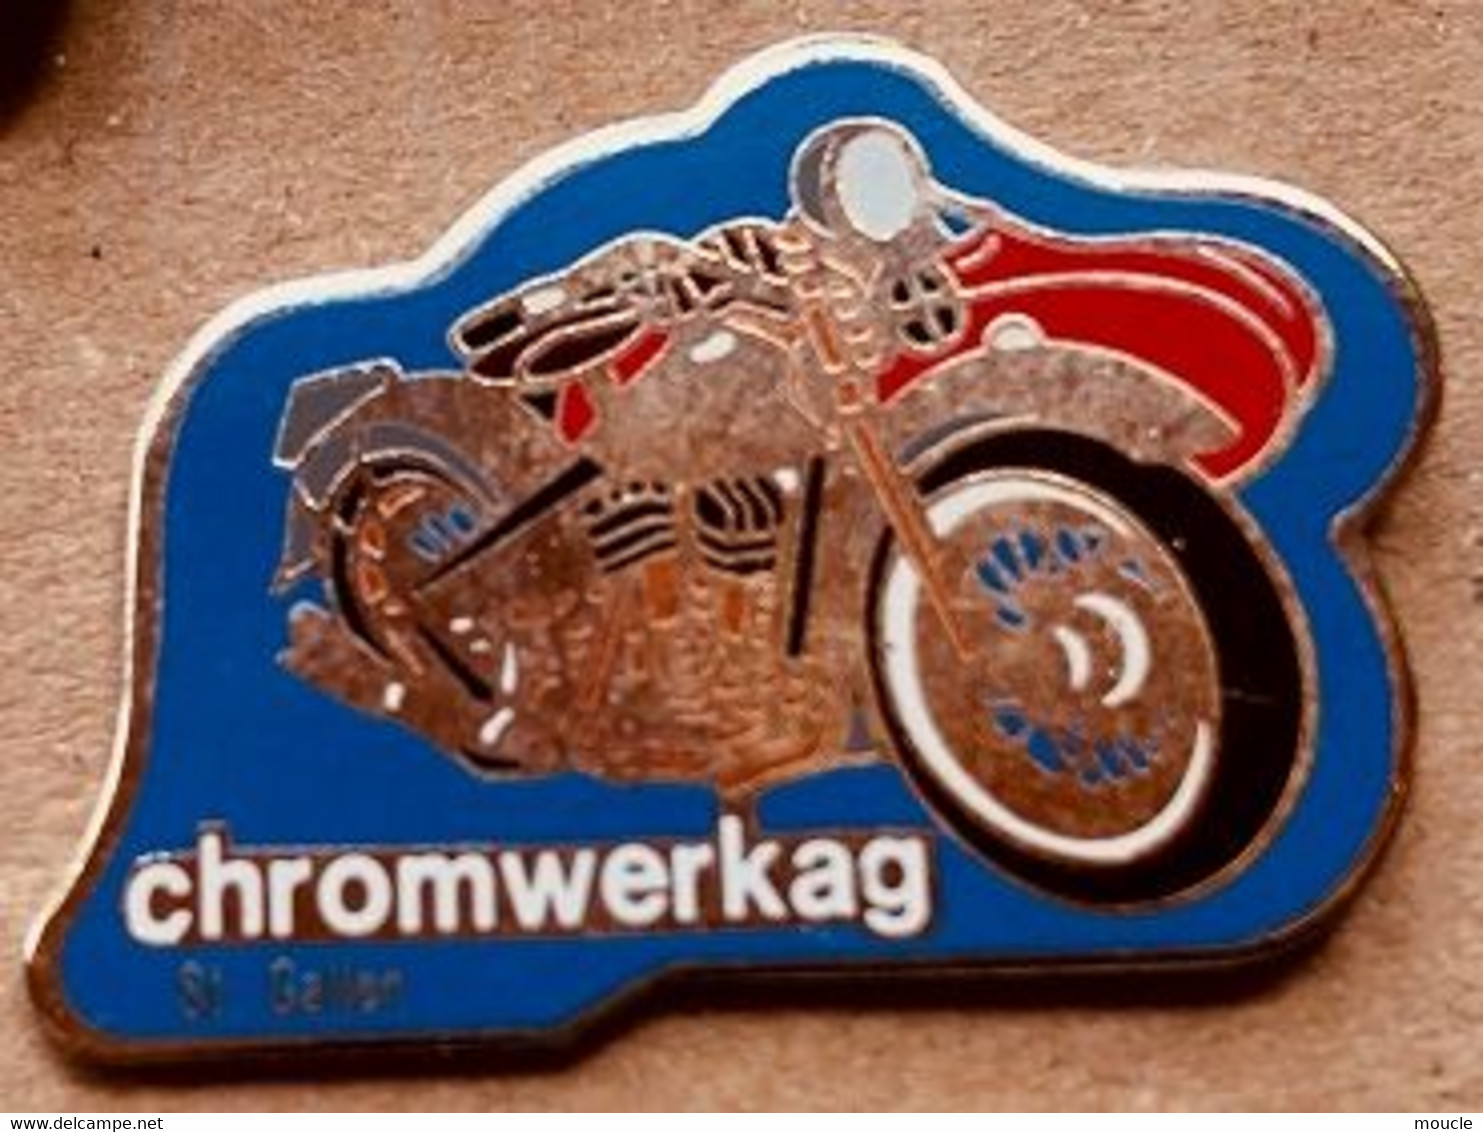 MOTO - SIDE CAR - CHROMWERKAG - SAINT GALLEN - SCHWEIZ - SAINT GALL - SUISSE - MOTORRAD    -                 (18) - Moto